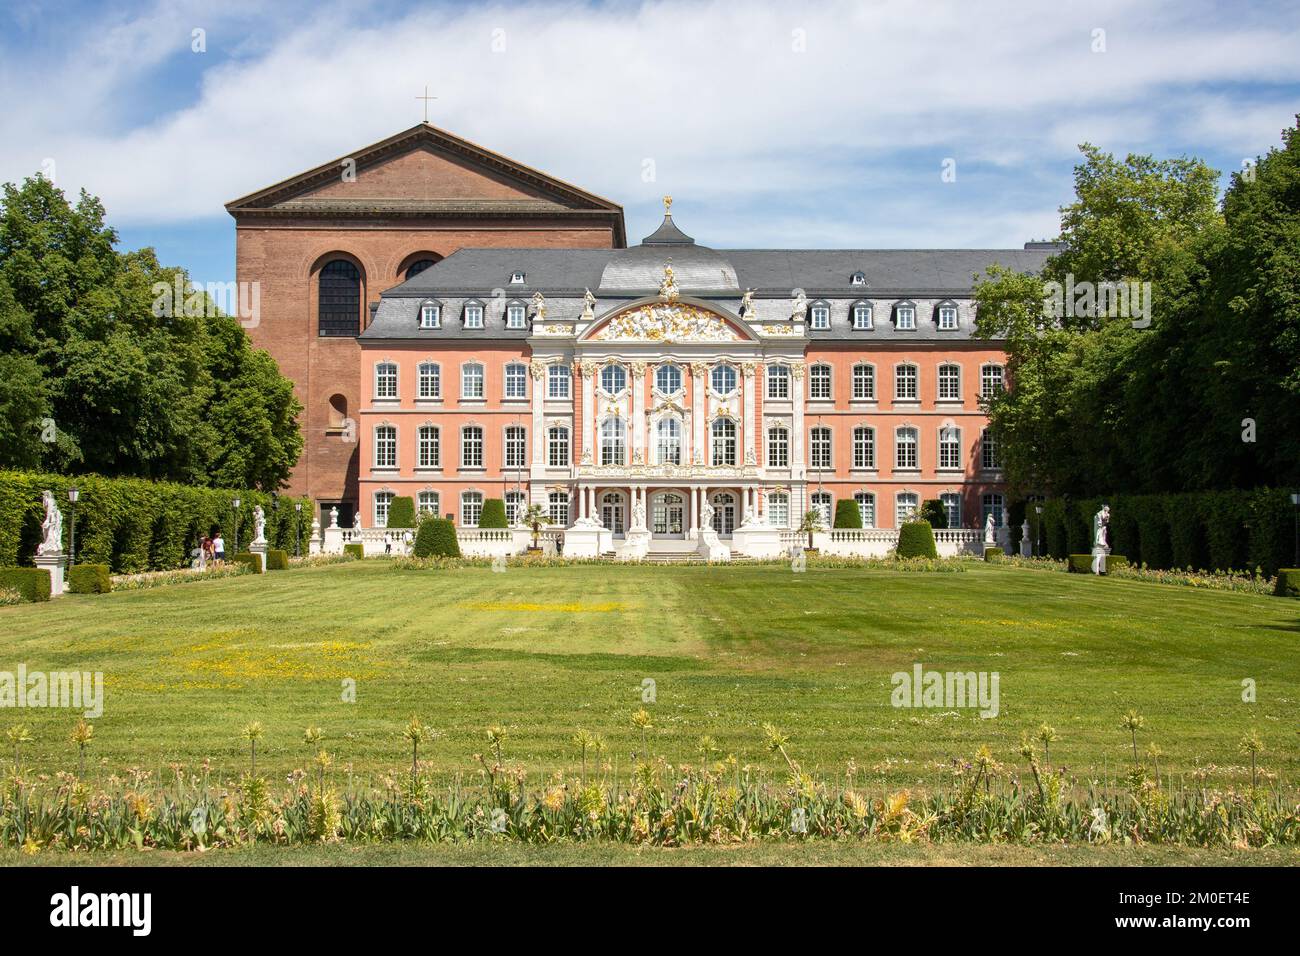 Palazzo elettorale o Kurfürstliches Palais, Treviri, Germania Foto Stock